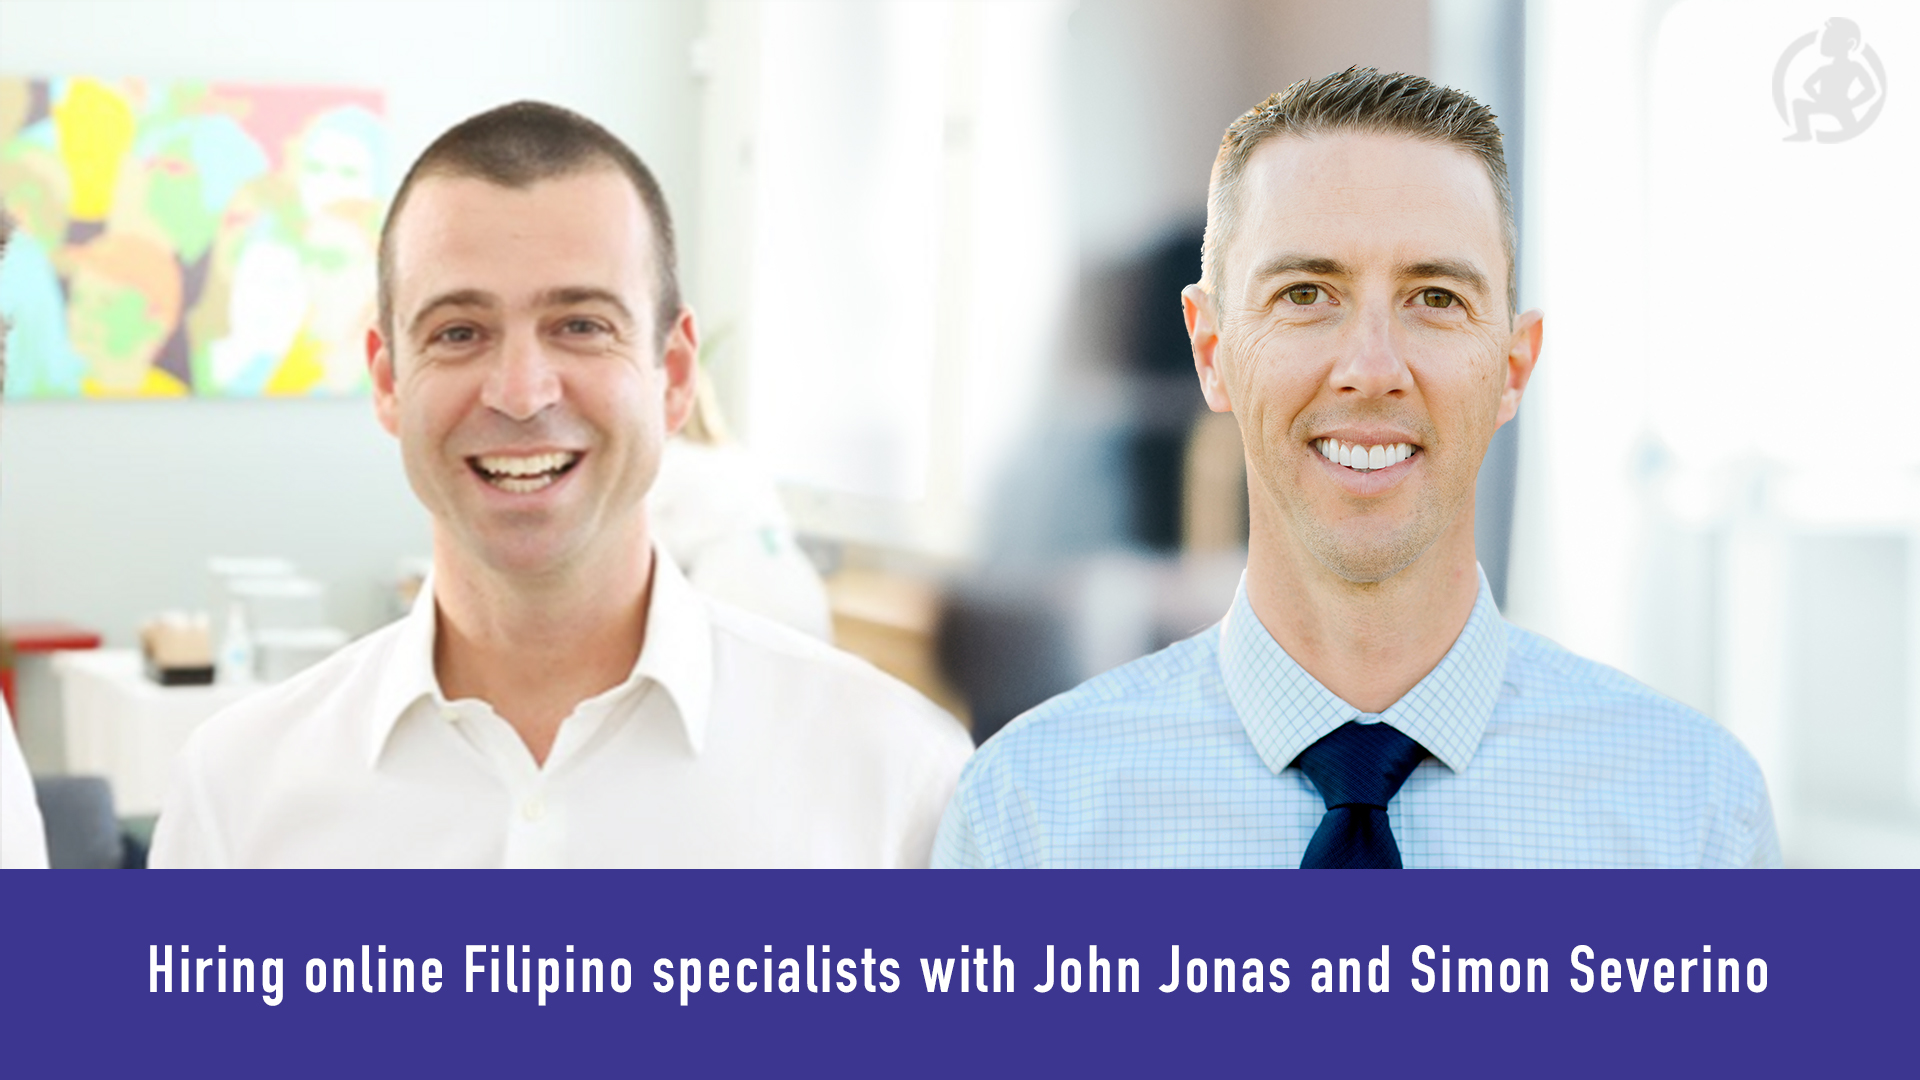 Hiring online Filipino specialists, John Jonas and Simon Severino